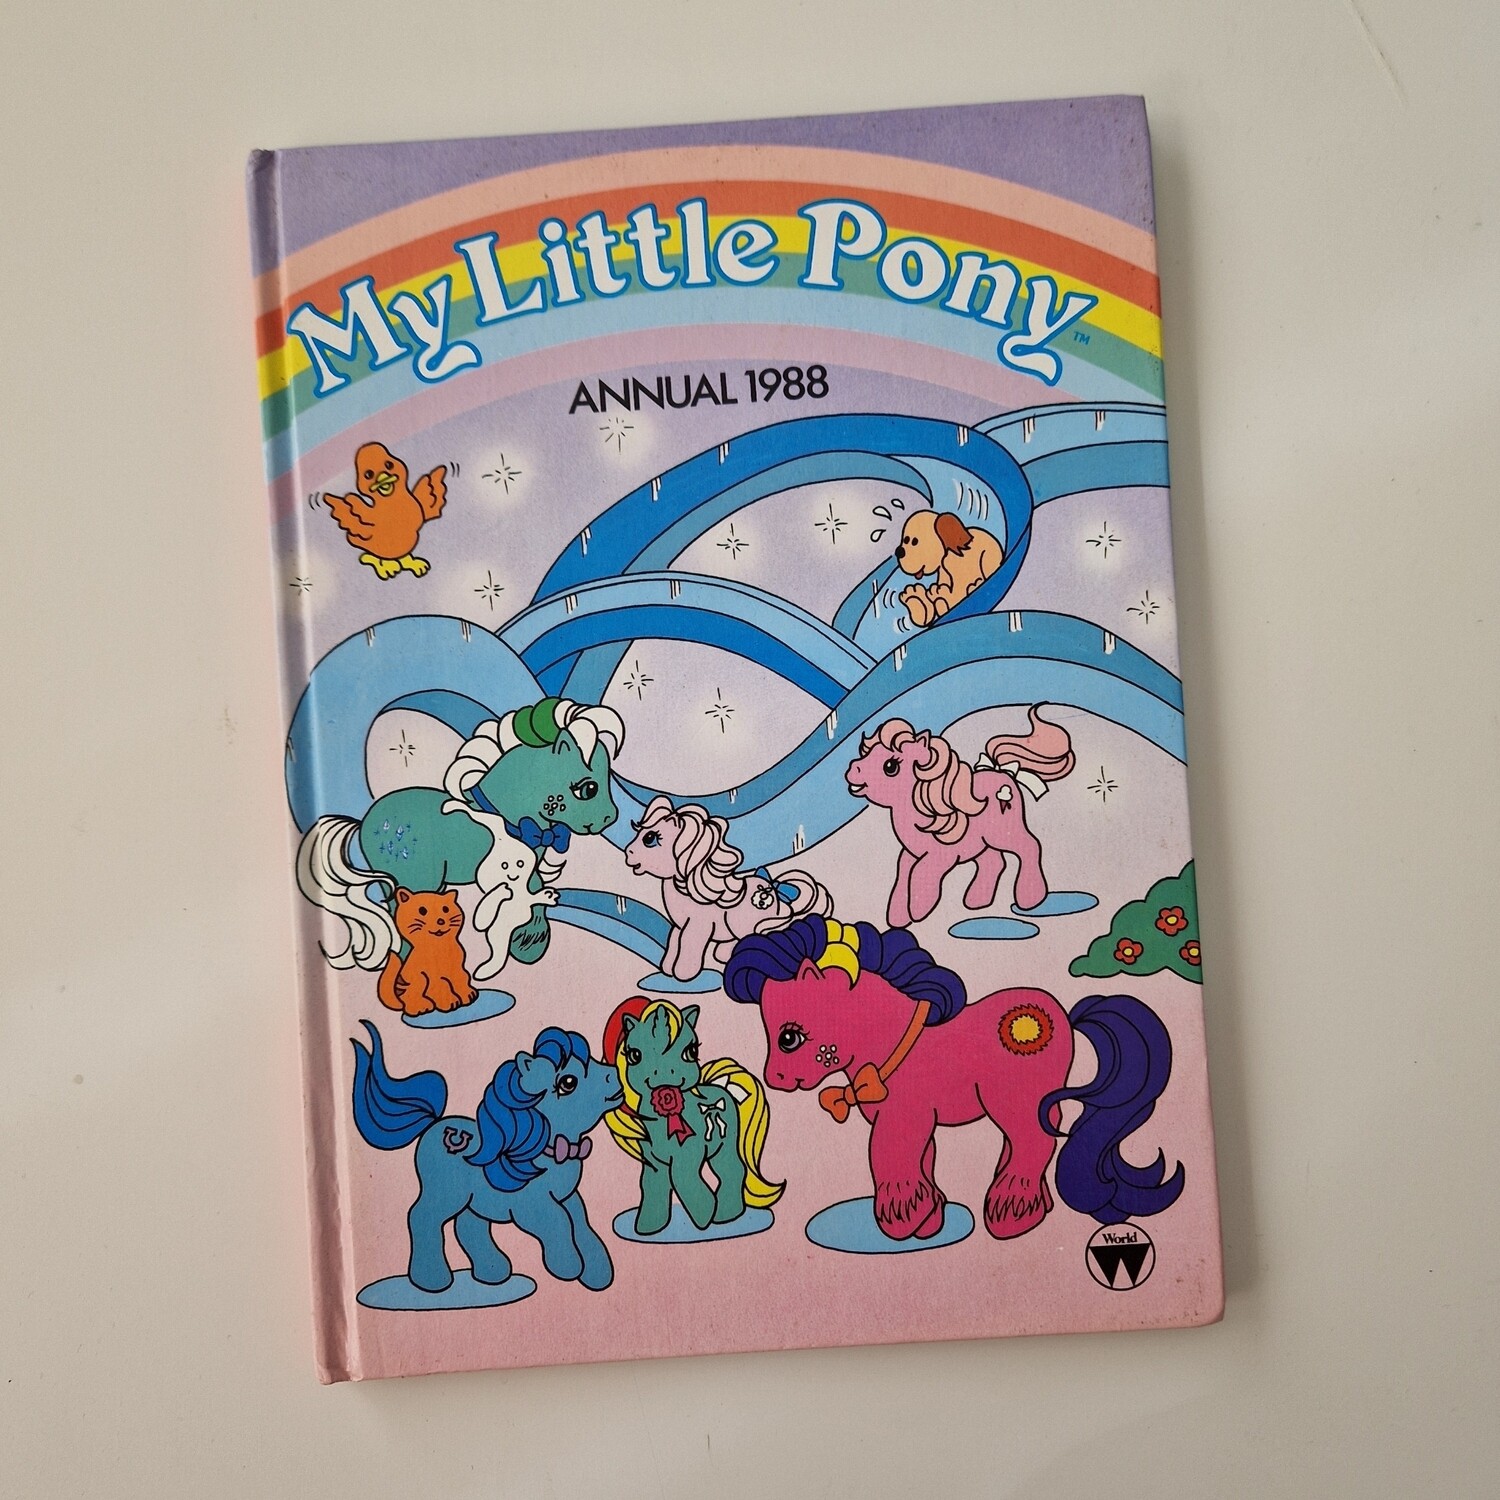 My Little Pony Annual 1988